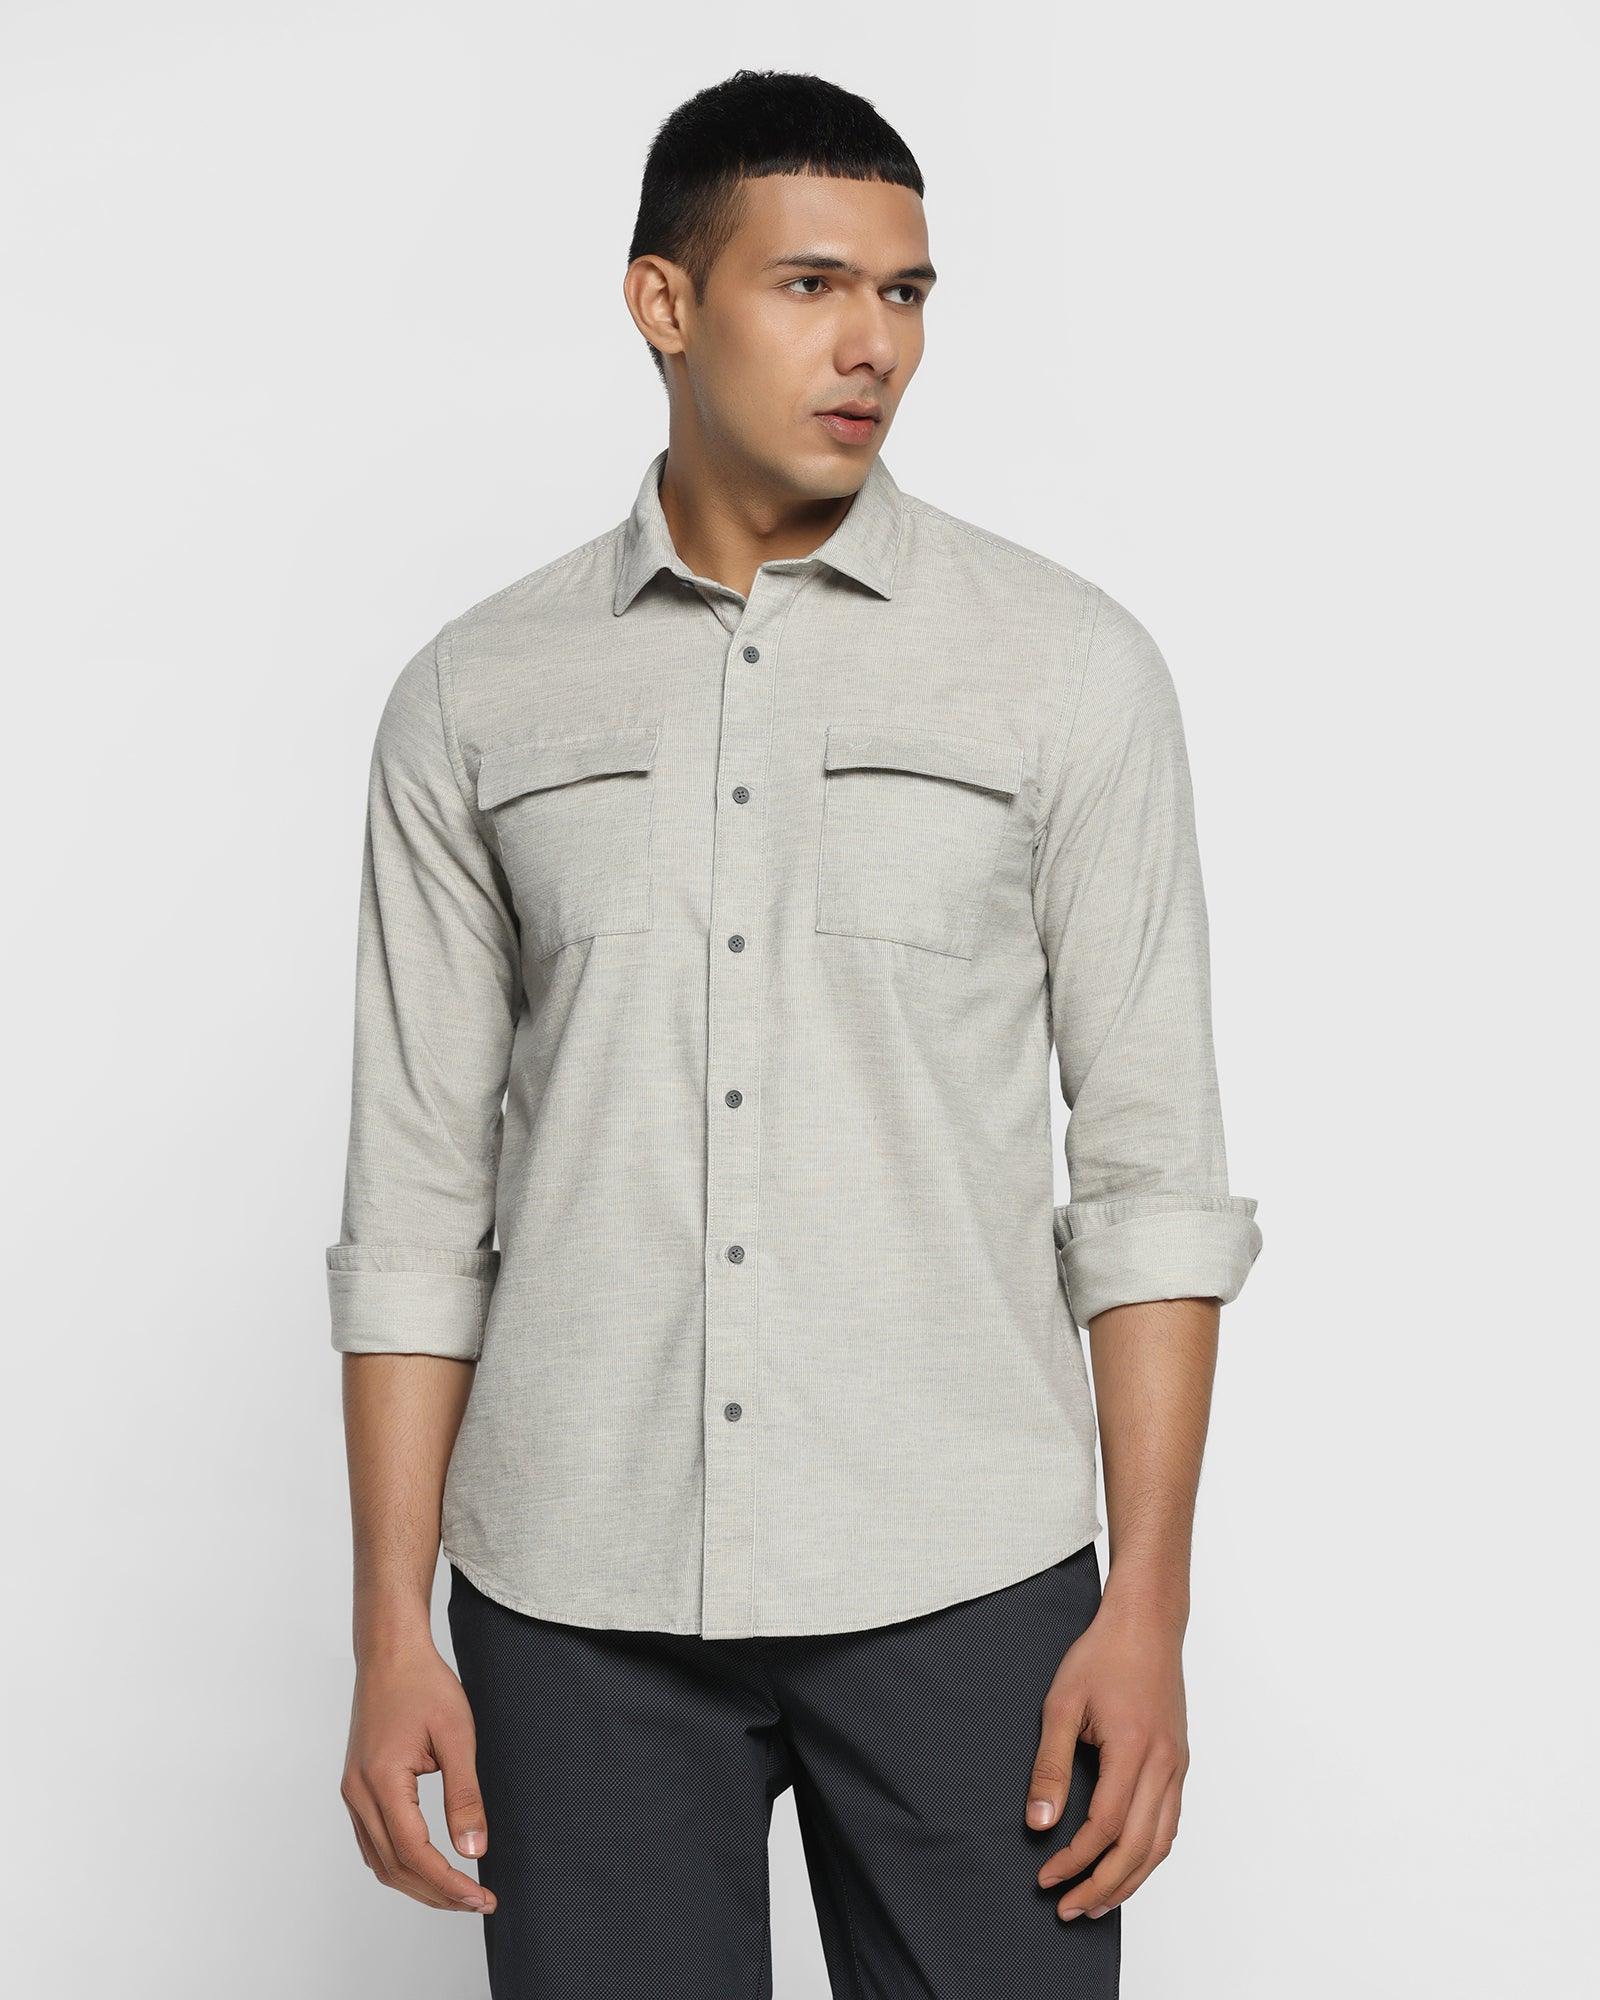 Casual Grey Solid Shirt - Ohio